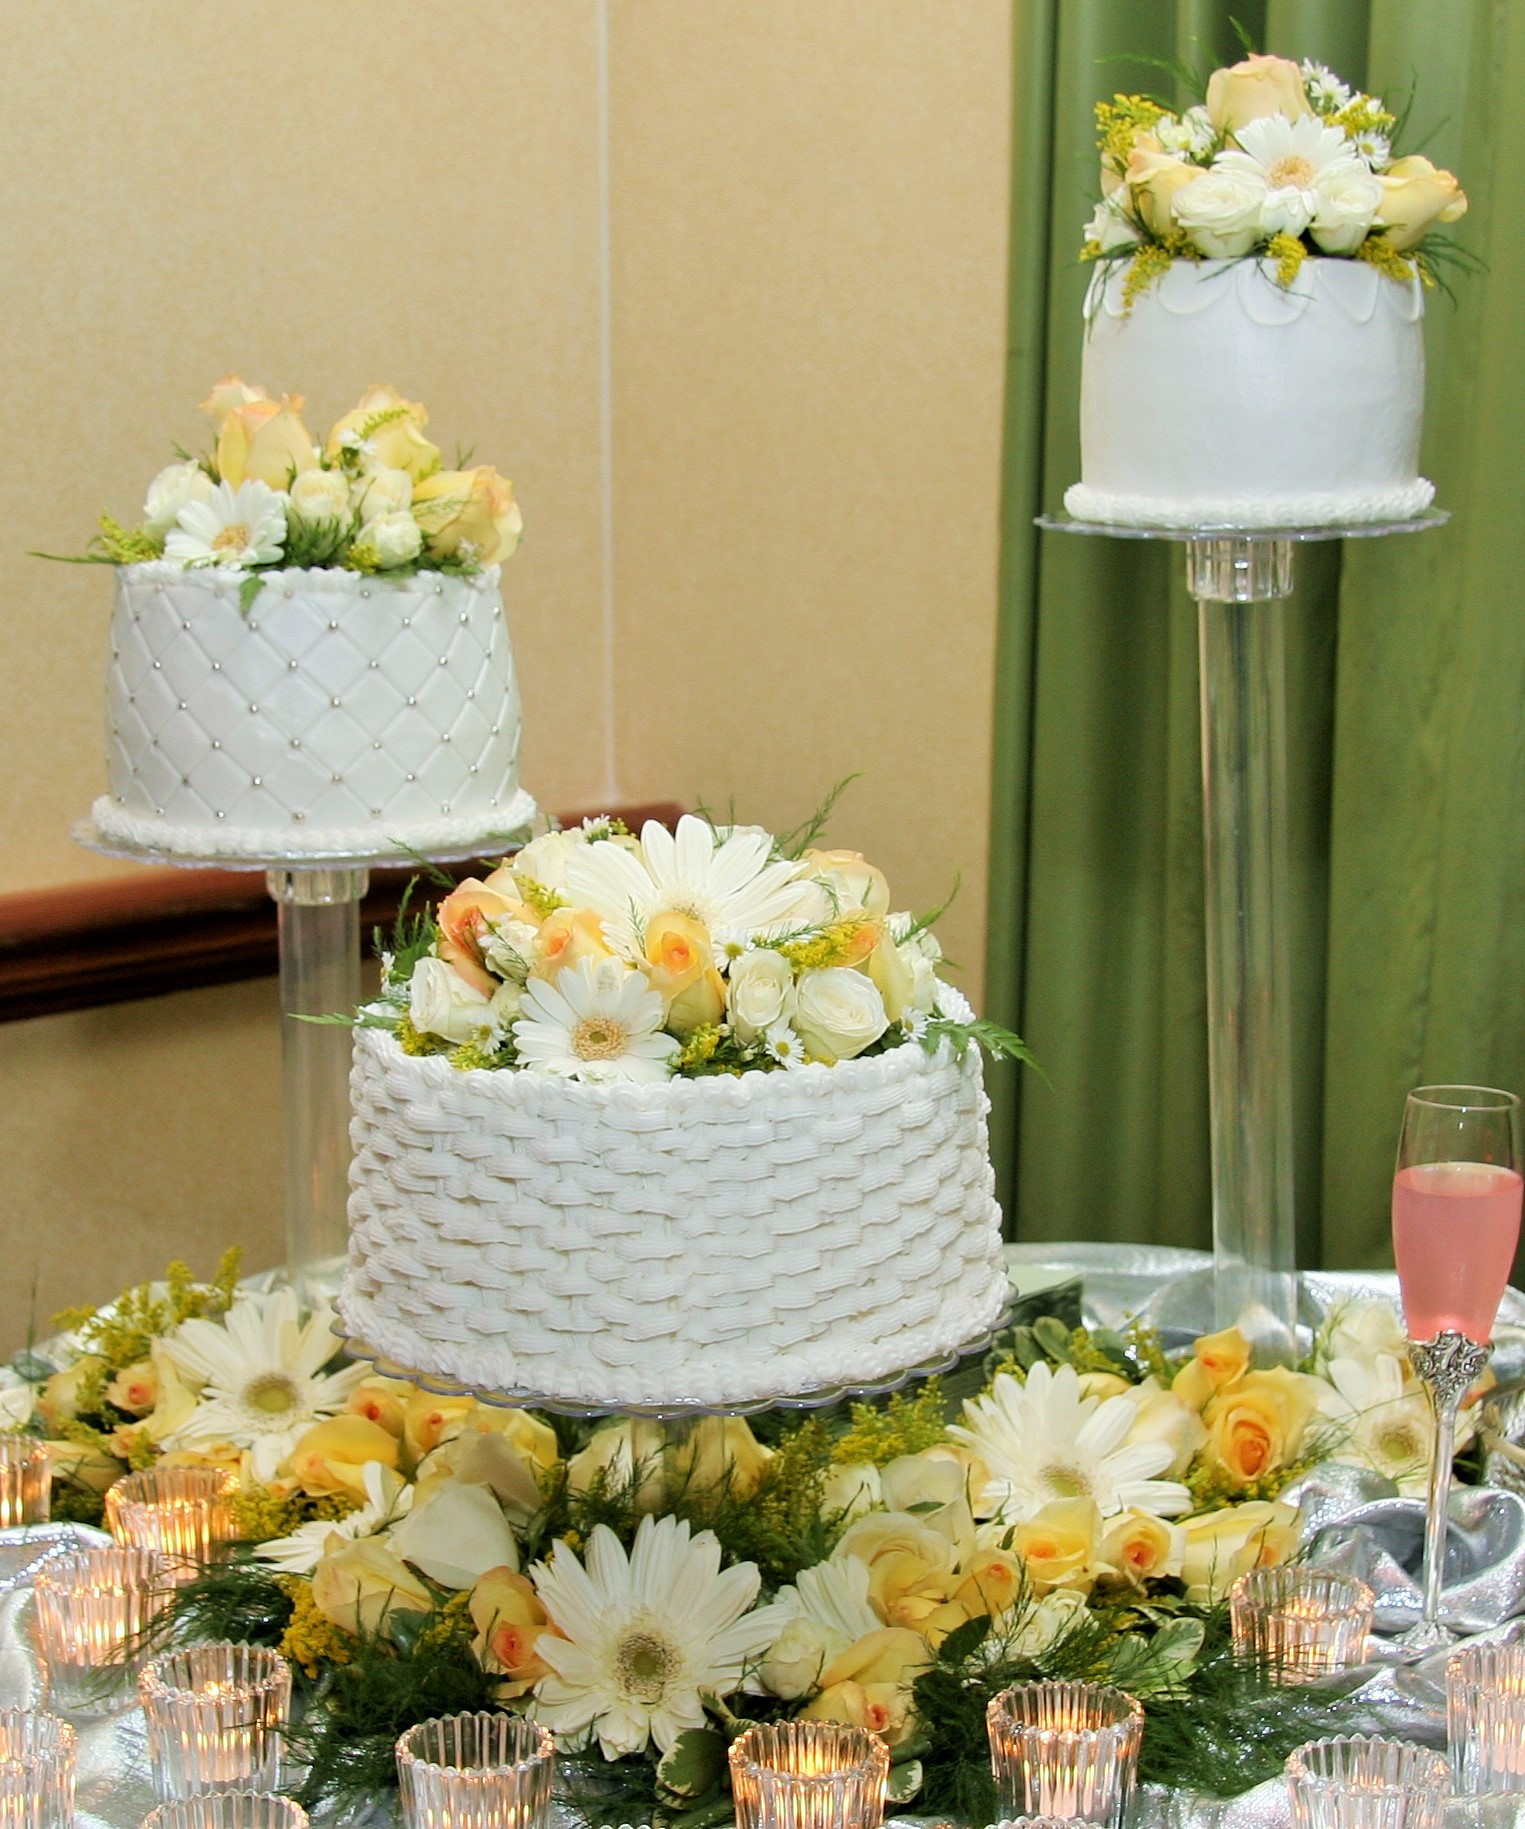 Separate Wedding Cakes
 Separate Tier Wedding Cakes